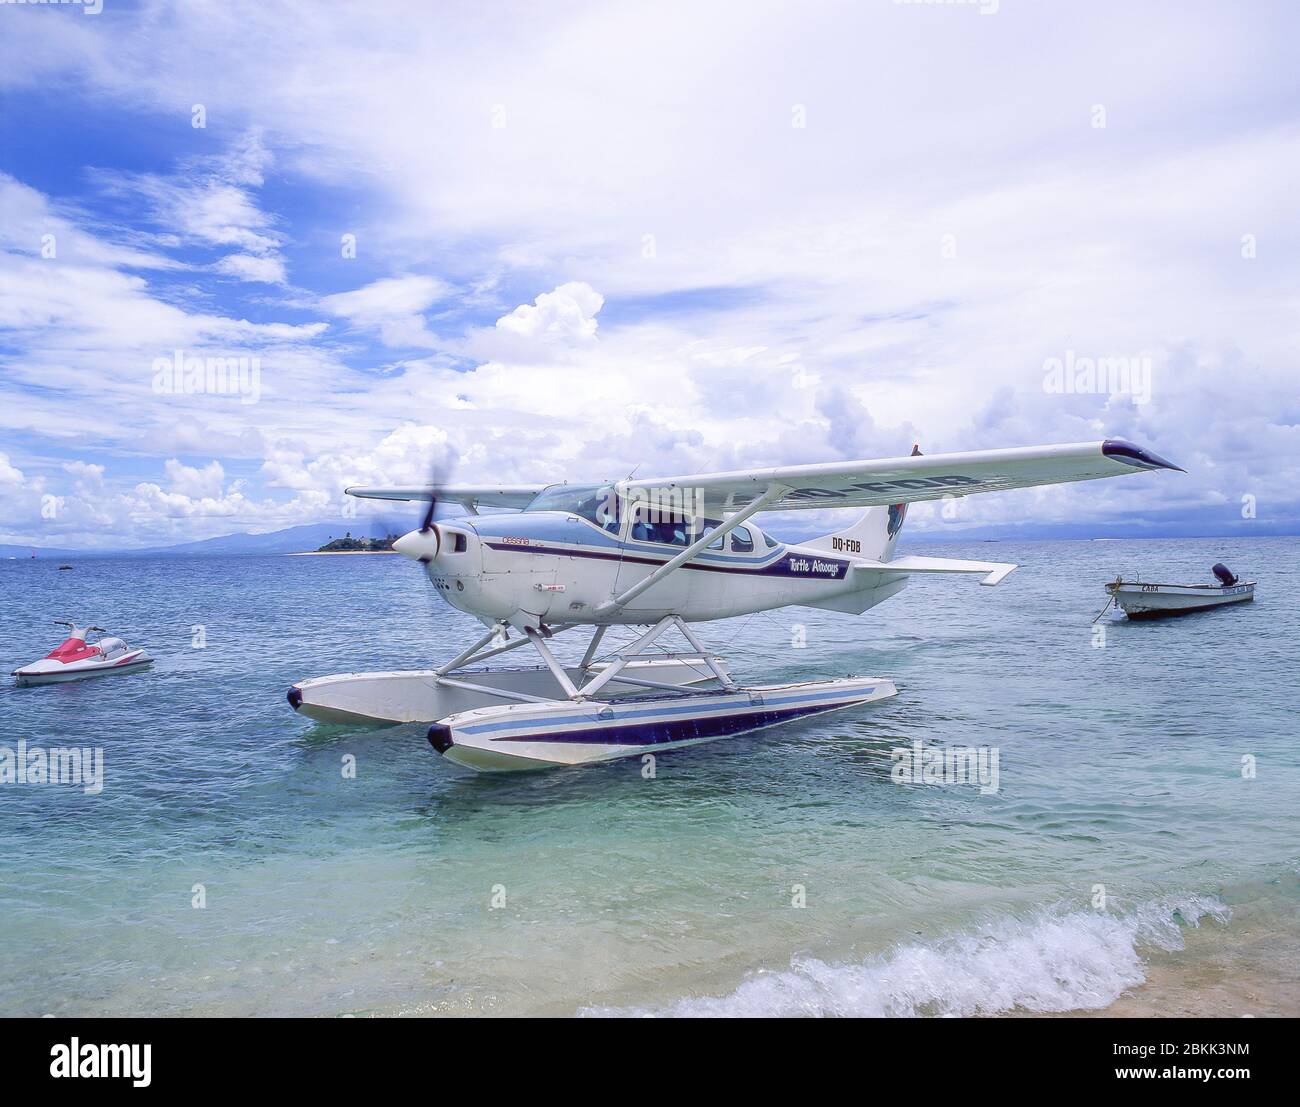 Turtle Airways Cessna Wasserflugzeug am Vorland, Beachcomber Island Resort, Beachcomber Island, Mamanuca Inseln, Republik Fidschi Stockfoto